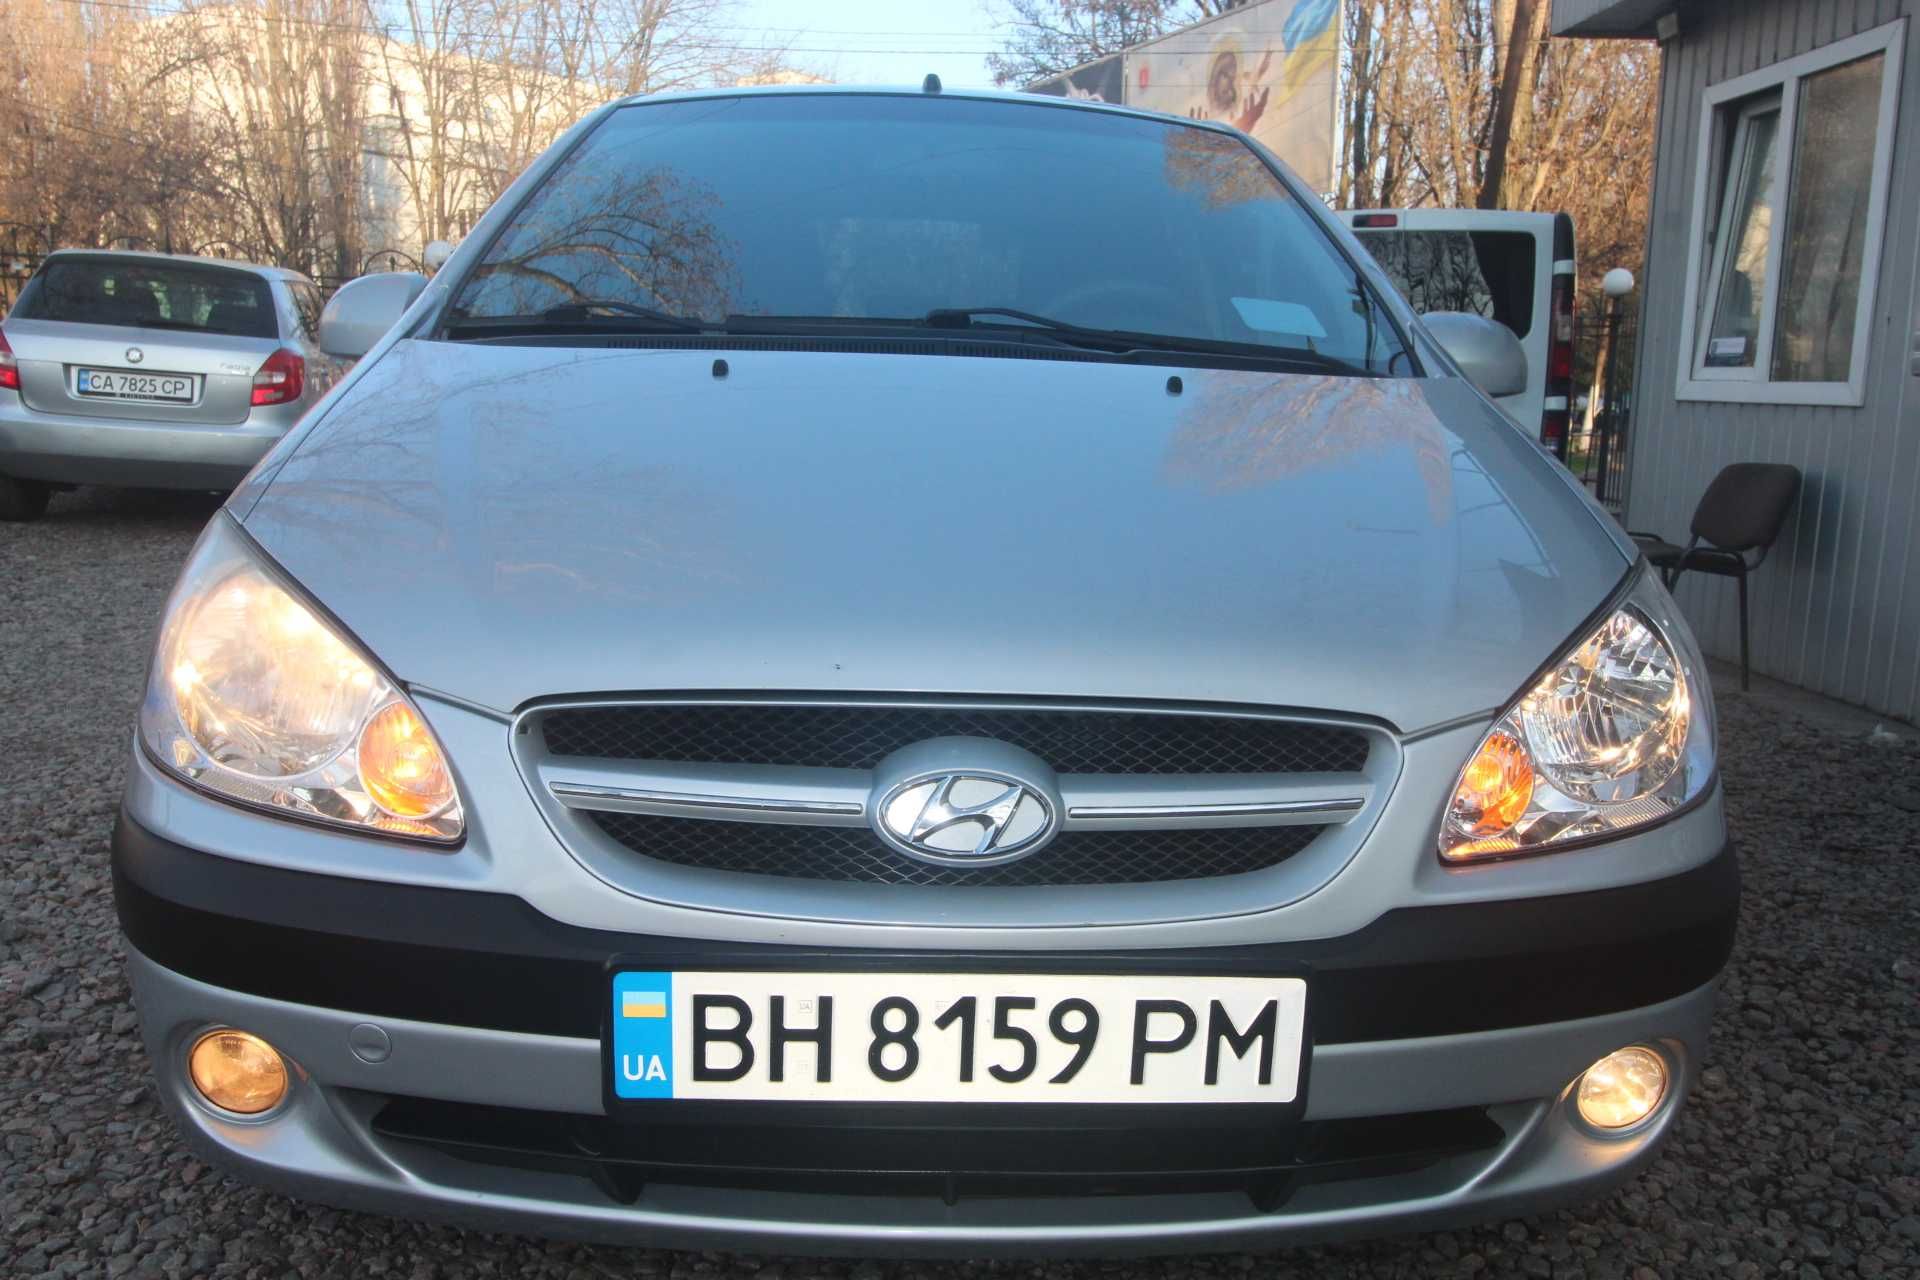 Продам автомобіль  Hyundai Getz 2006 бенз, 1,4 мех